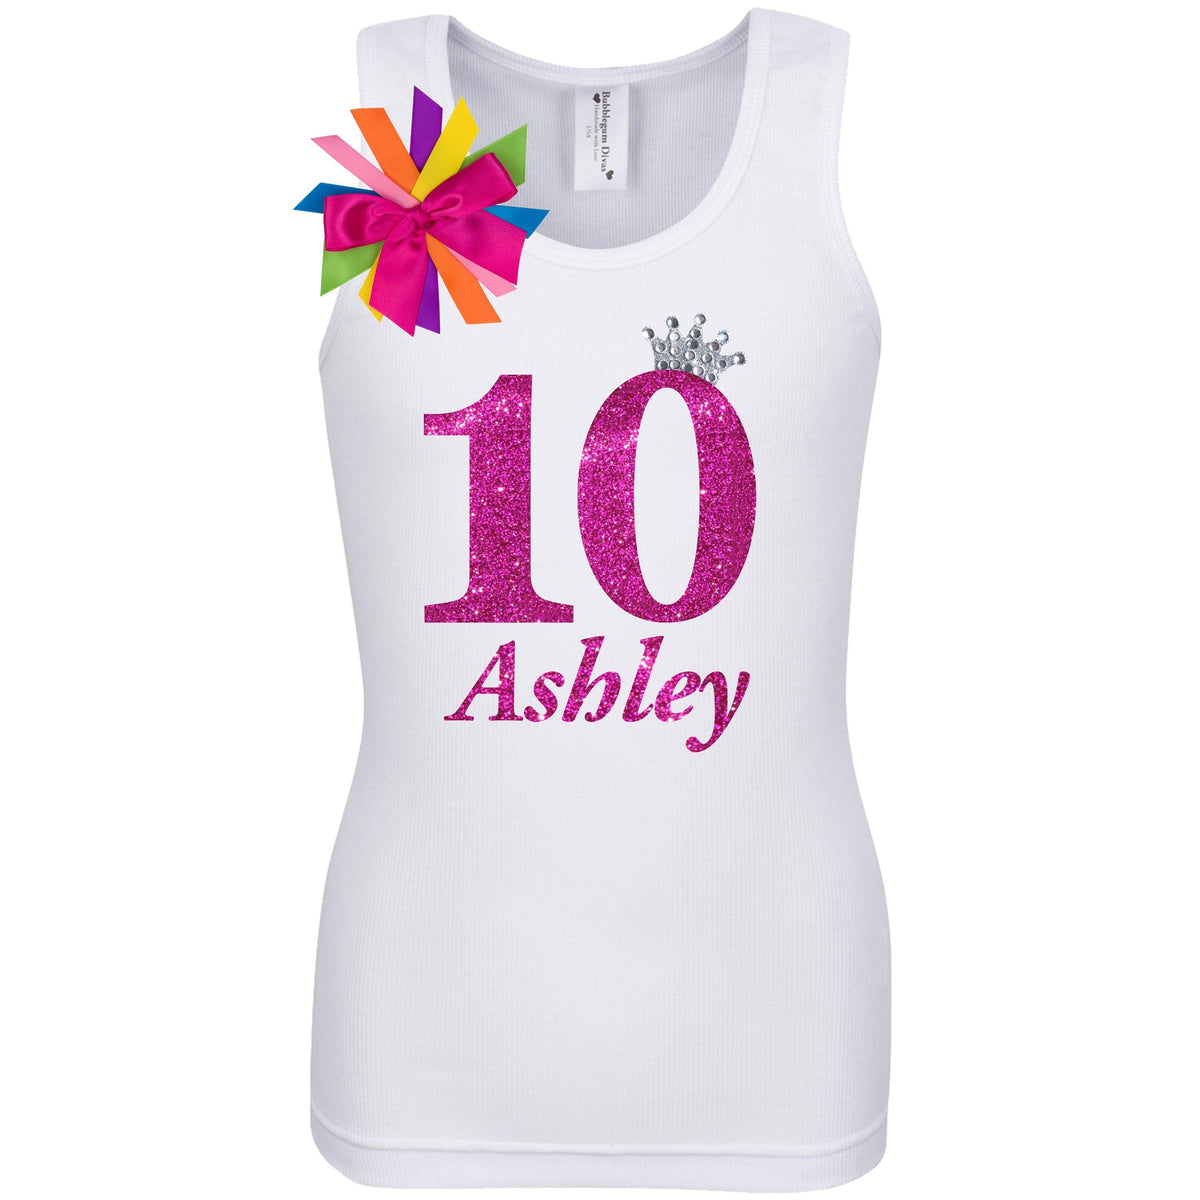 11th Birthday Shirt Girls Birthday Outfit 11 Year Old Girl 11th Birthday  Gifts Cute Birthday Girl Shirt 